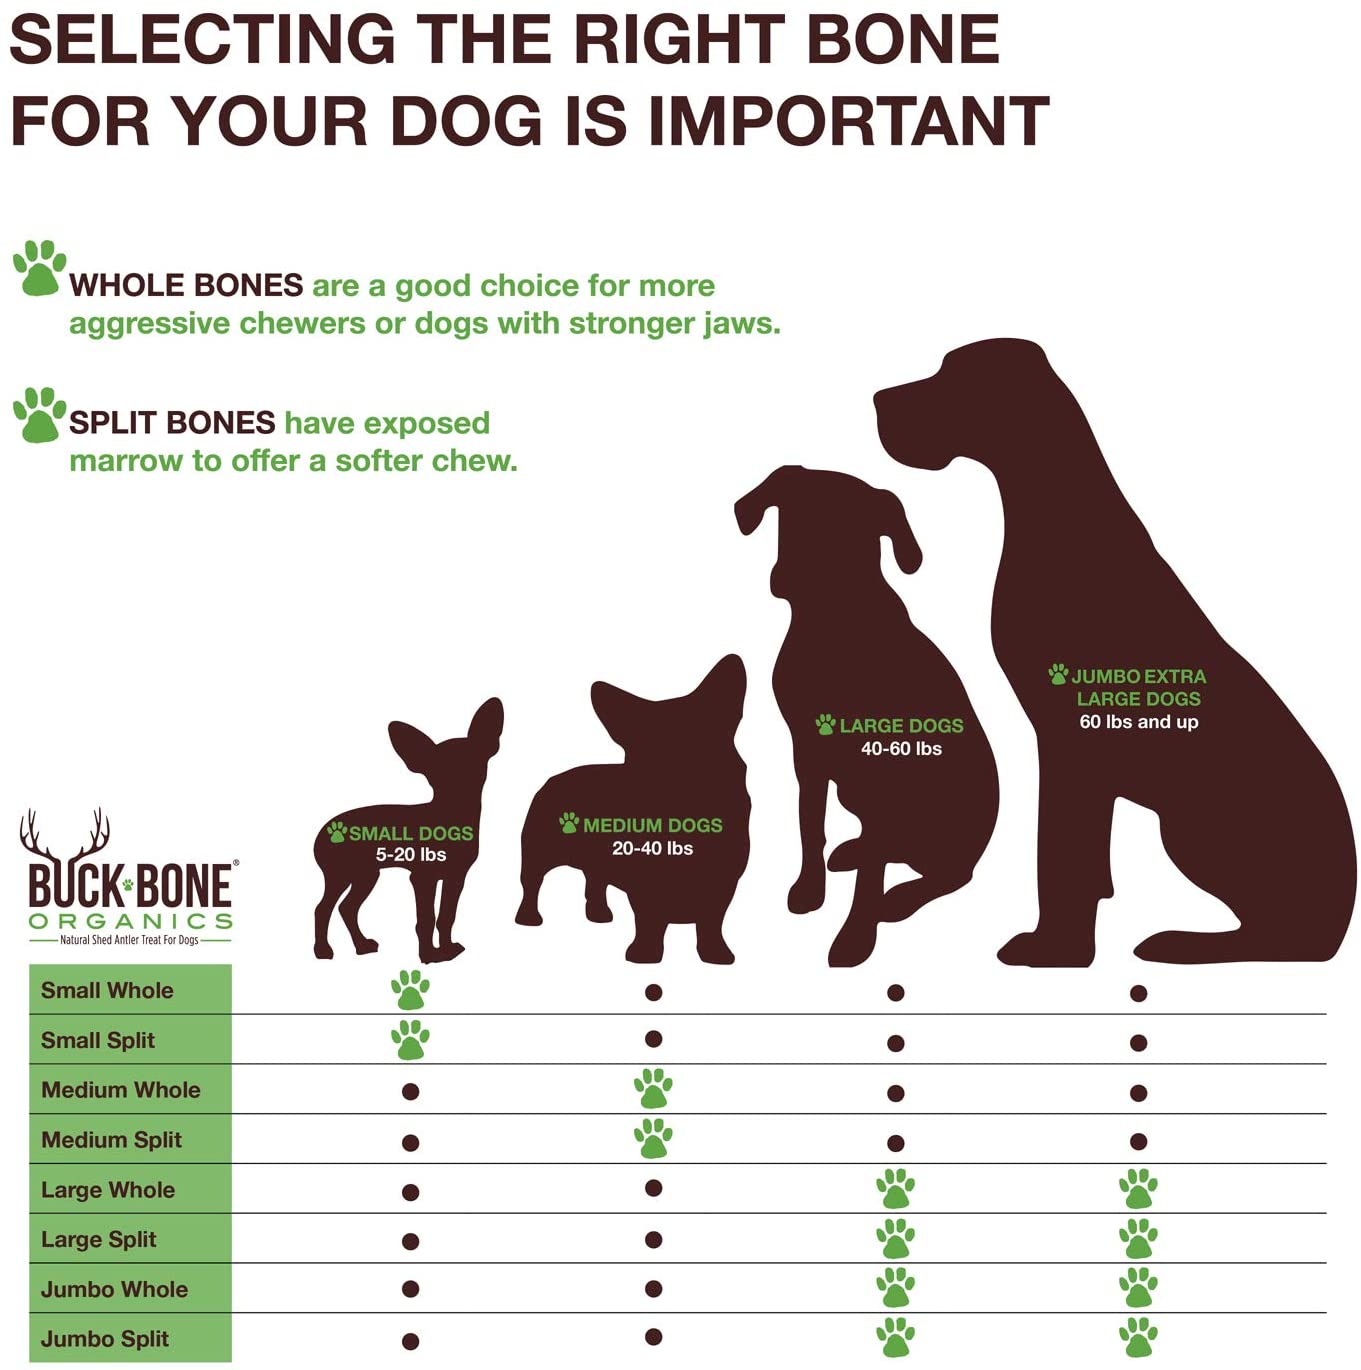 Buck Bone Organics Value Pack